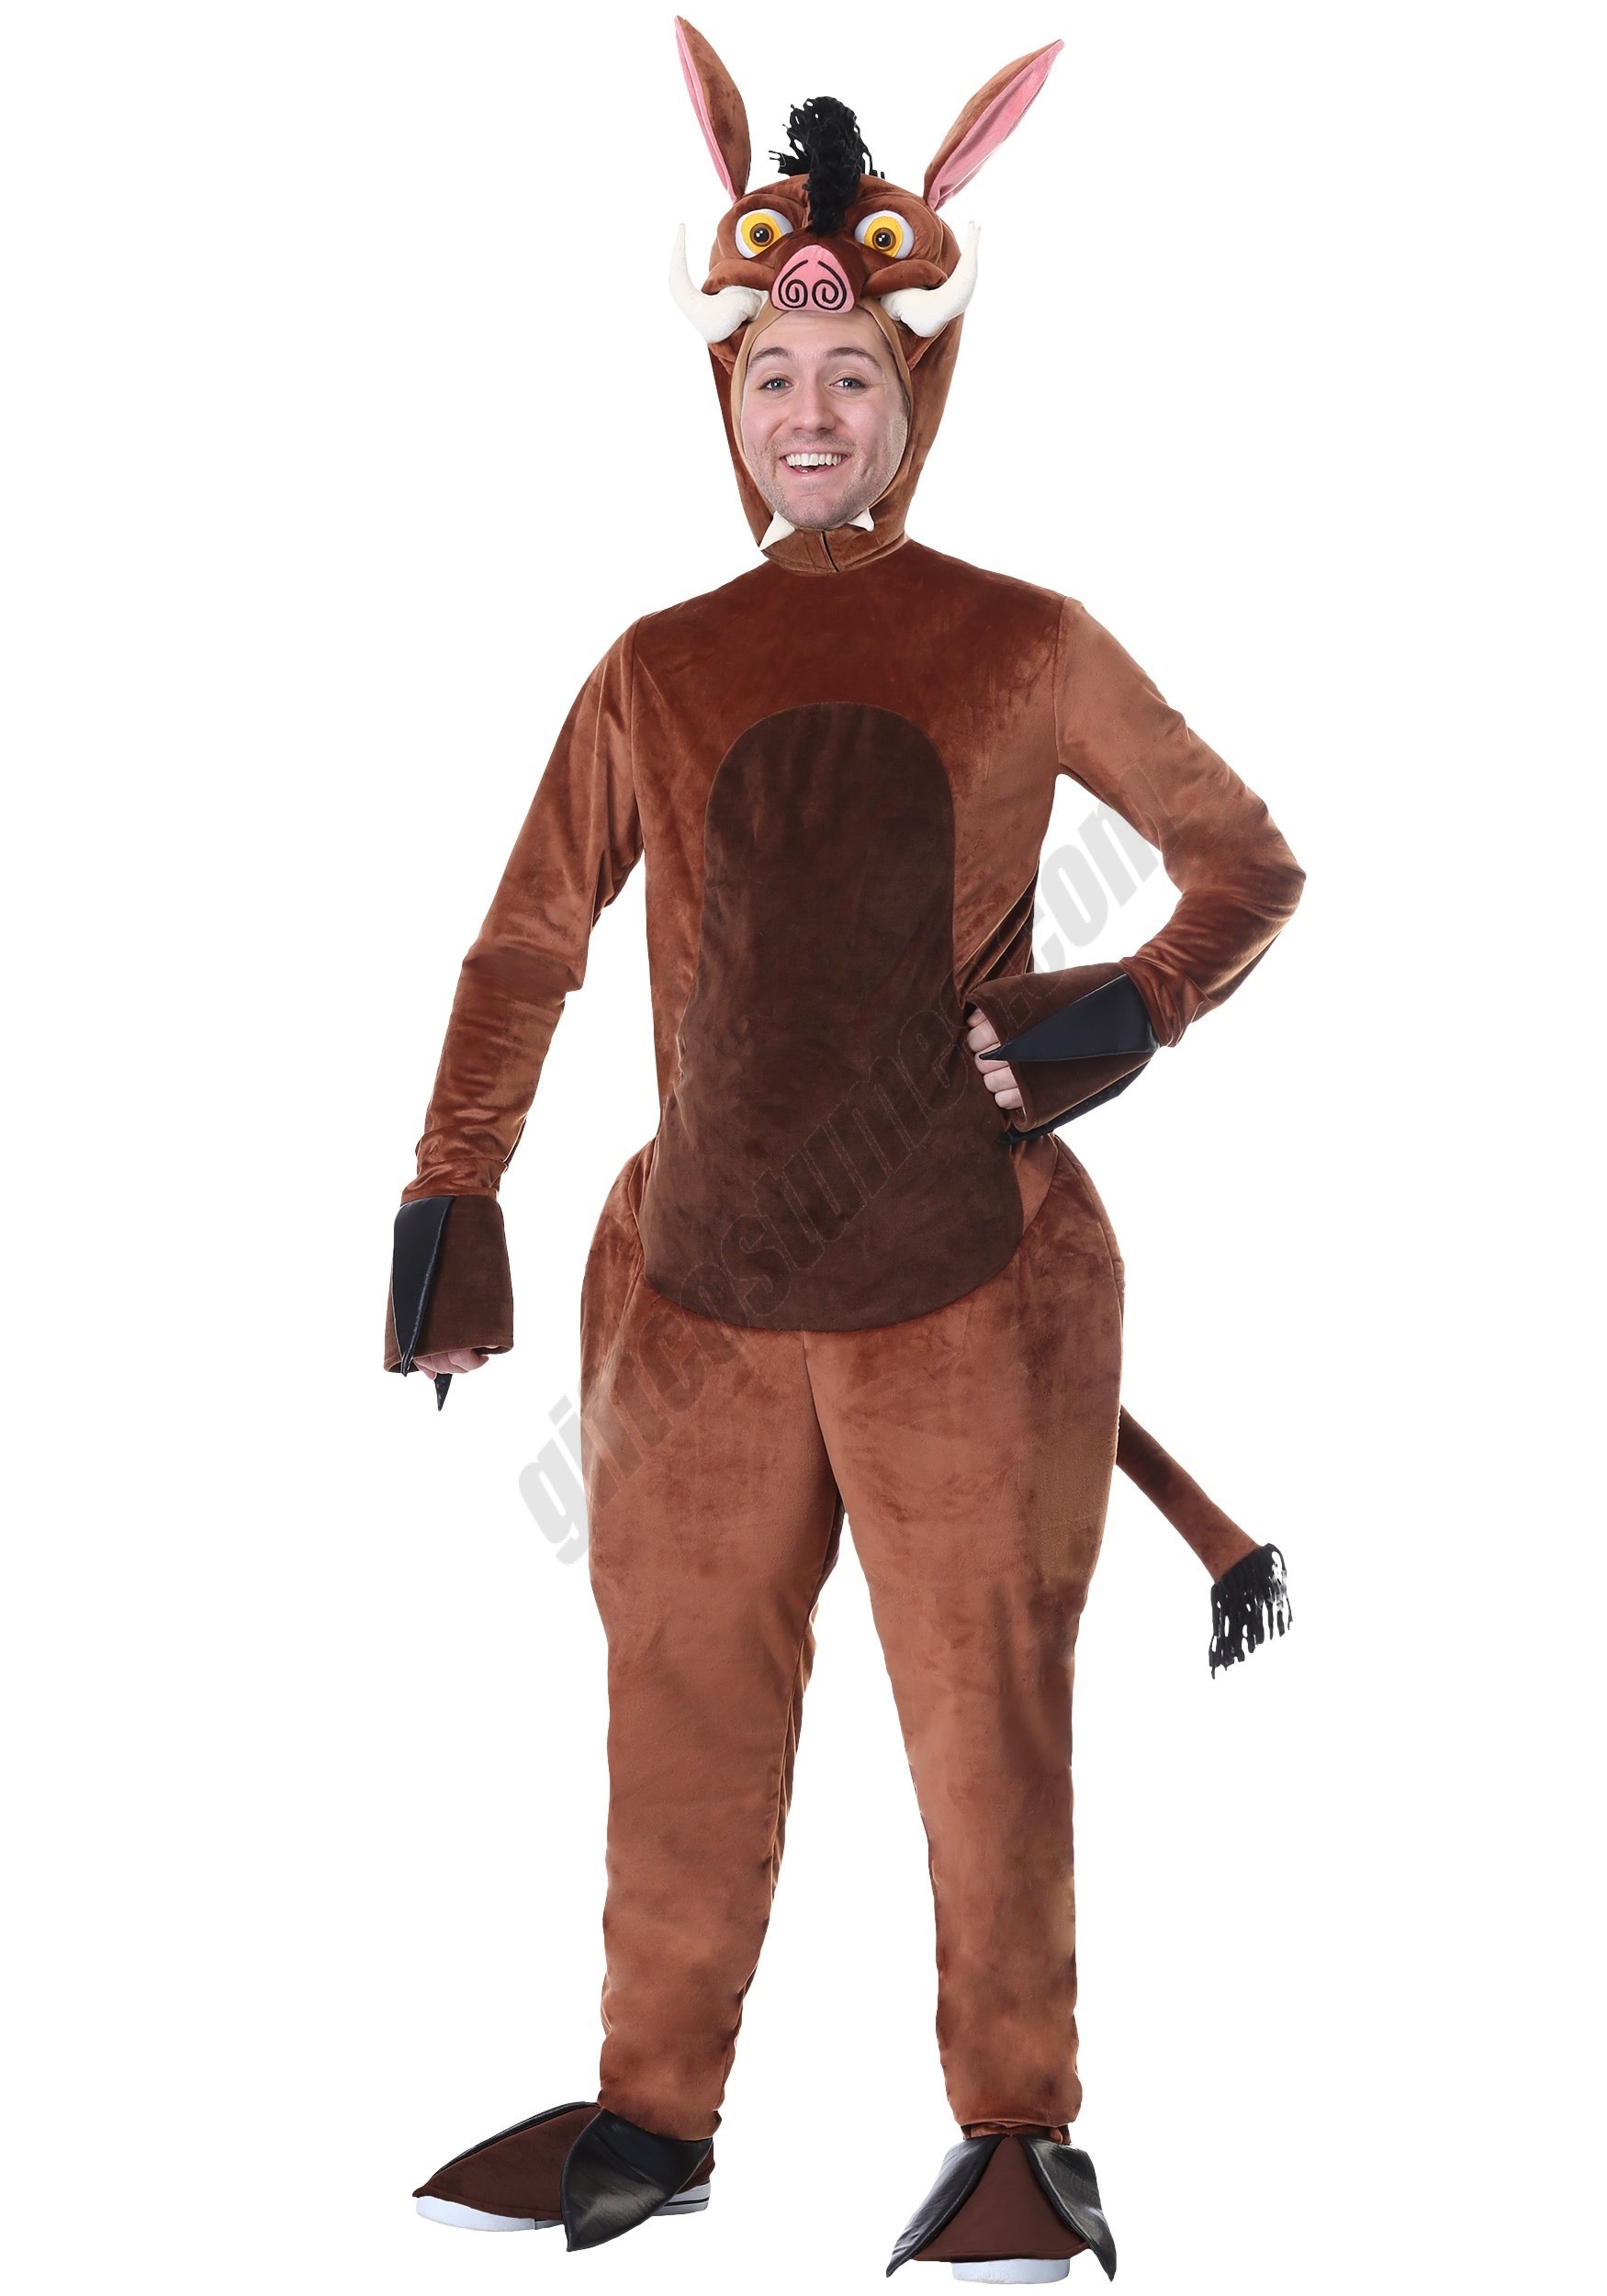 Warthog Costume for Adults - Men's - Warthog Costume for Adults - Men's